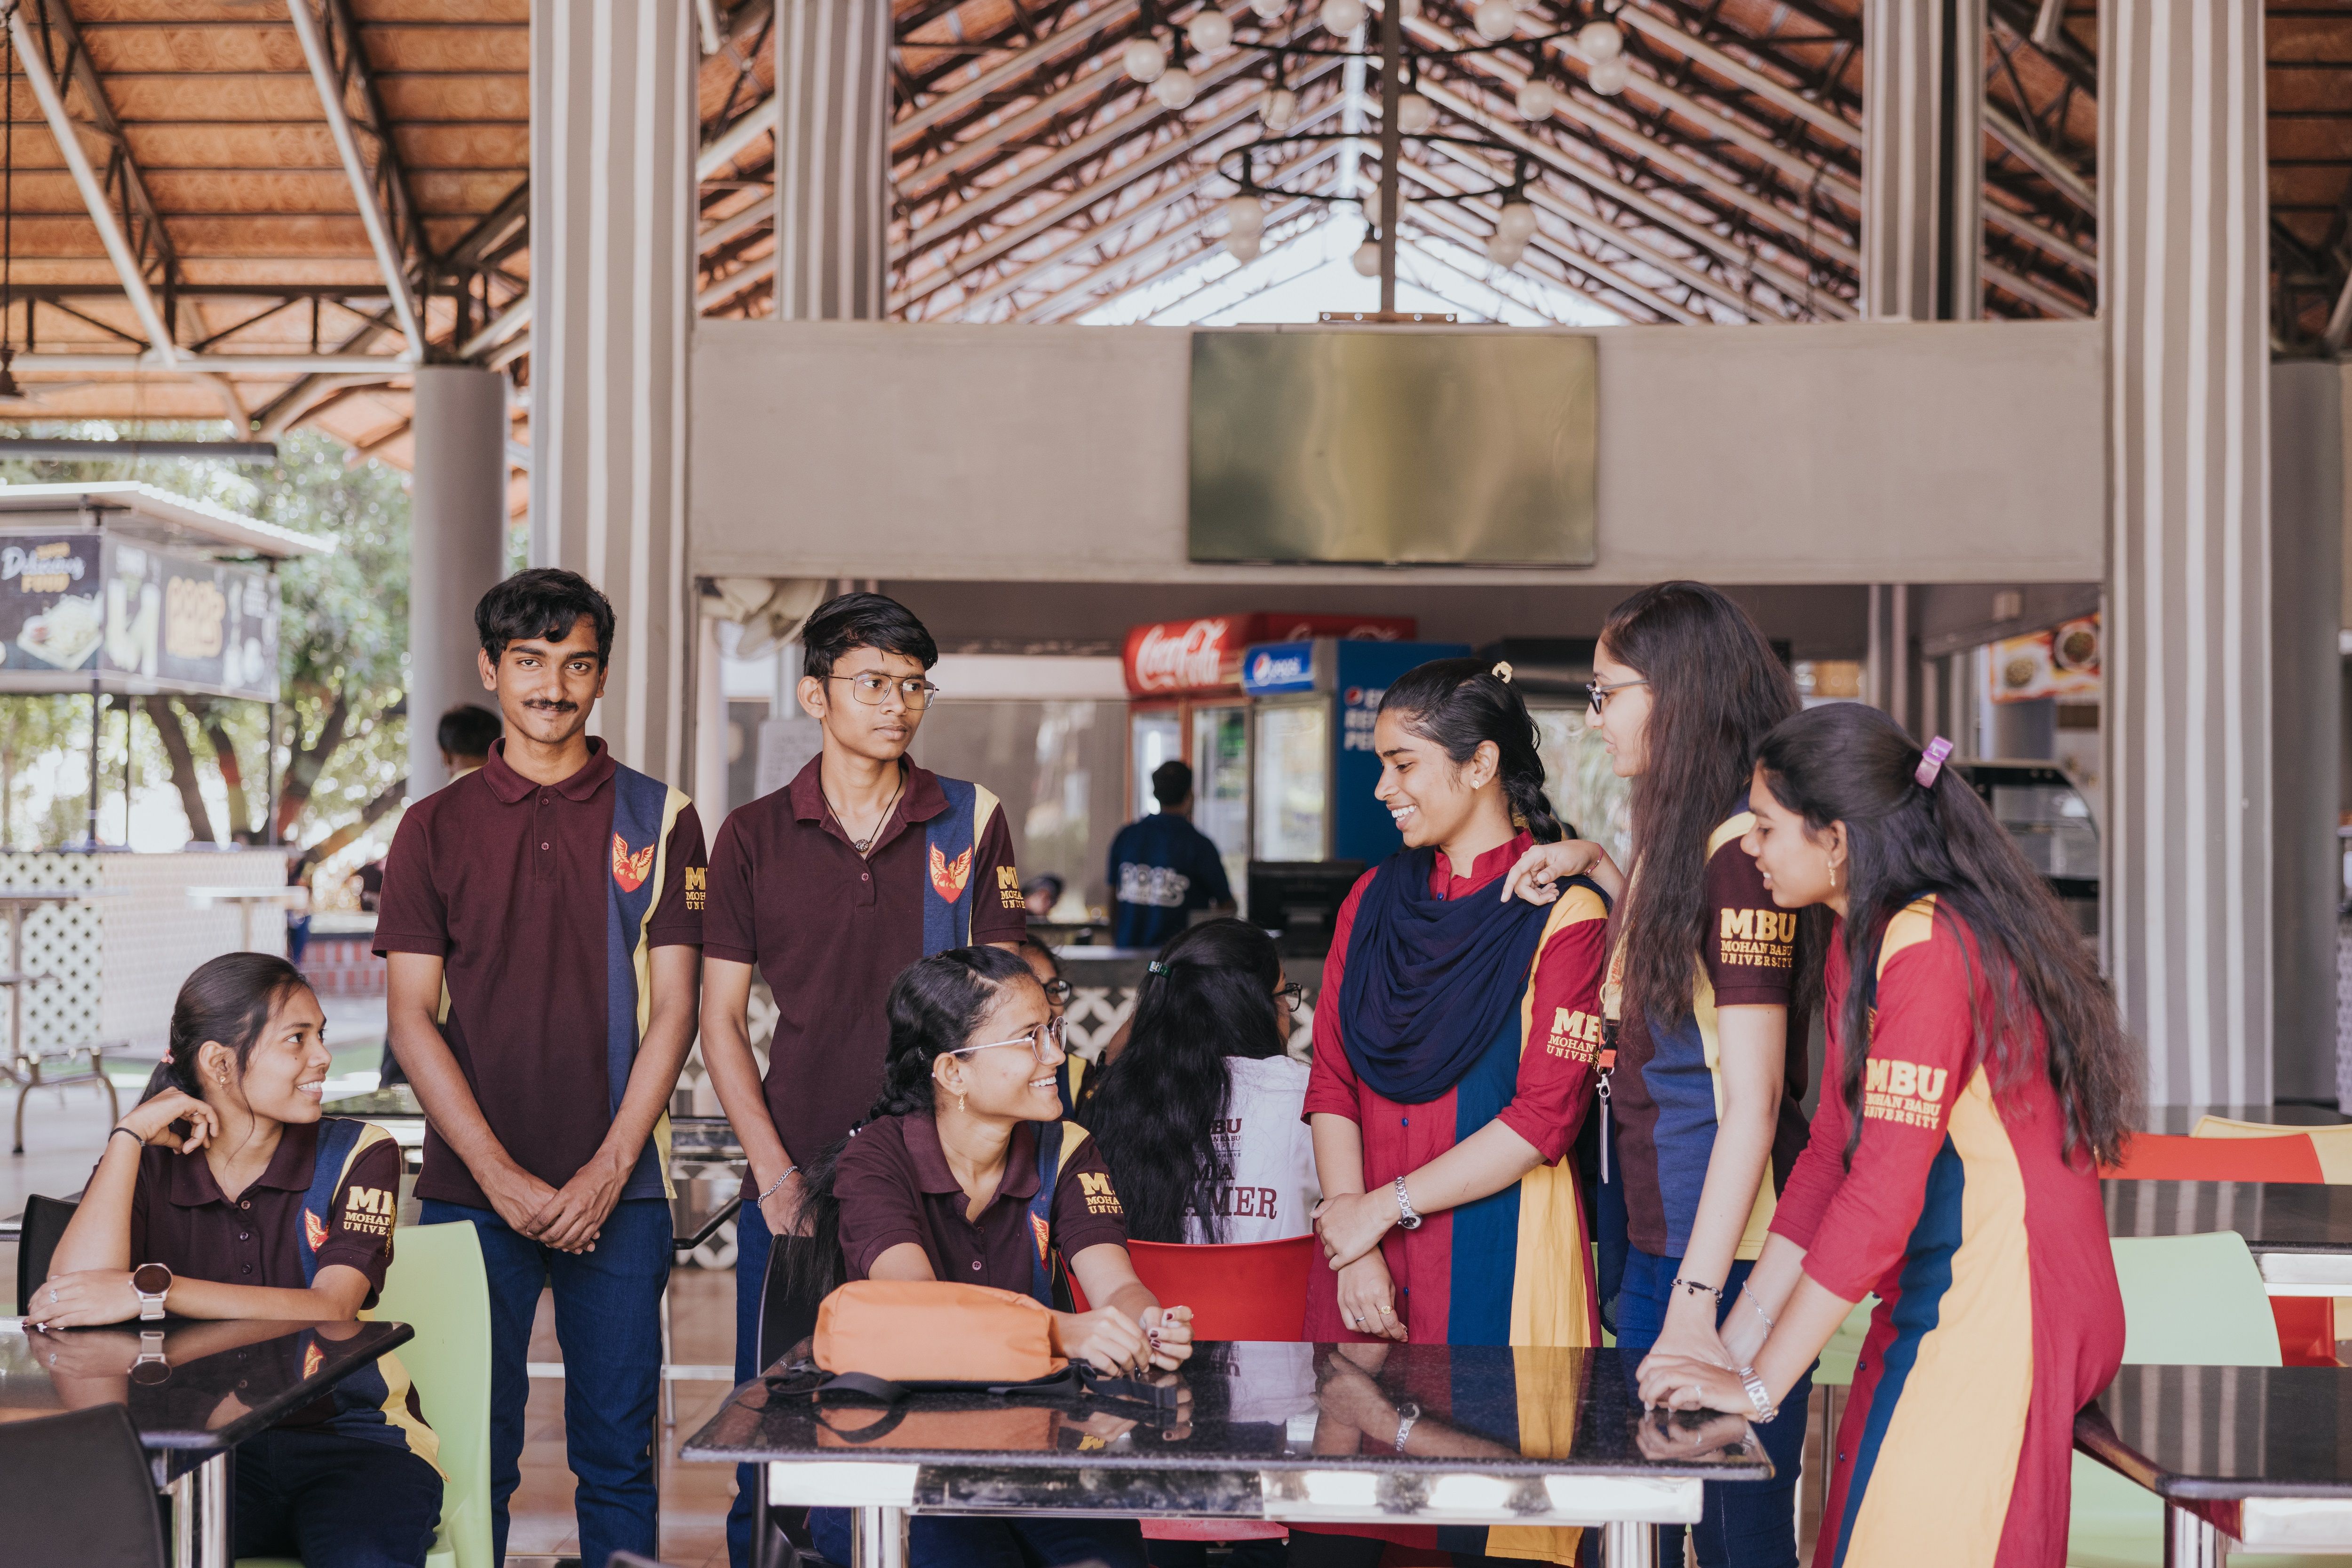 Mohan Babu University Cafeteria / Mess